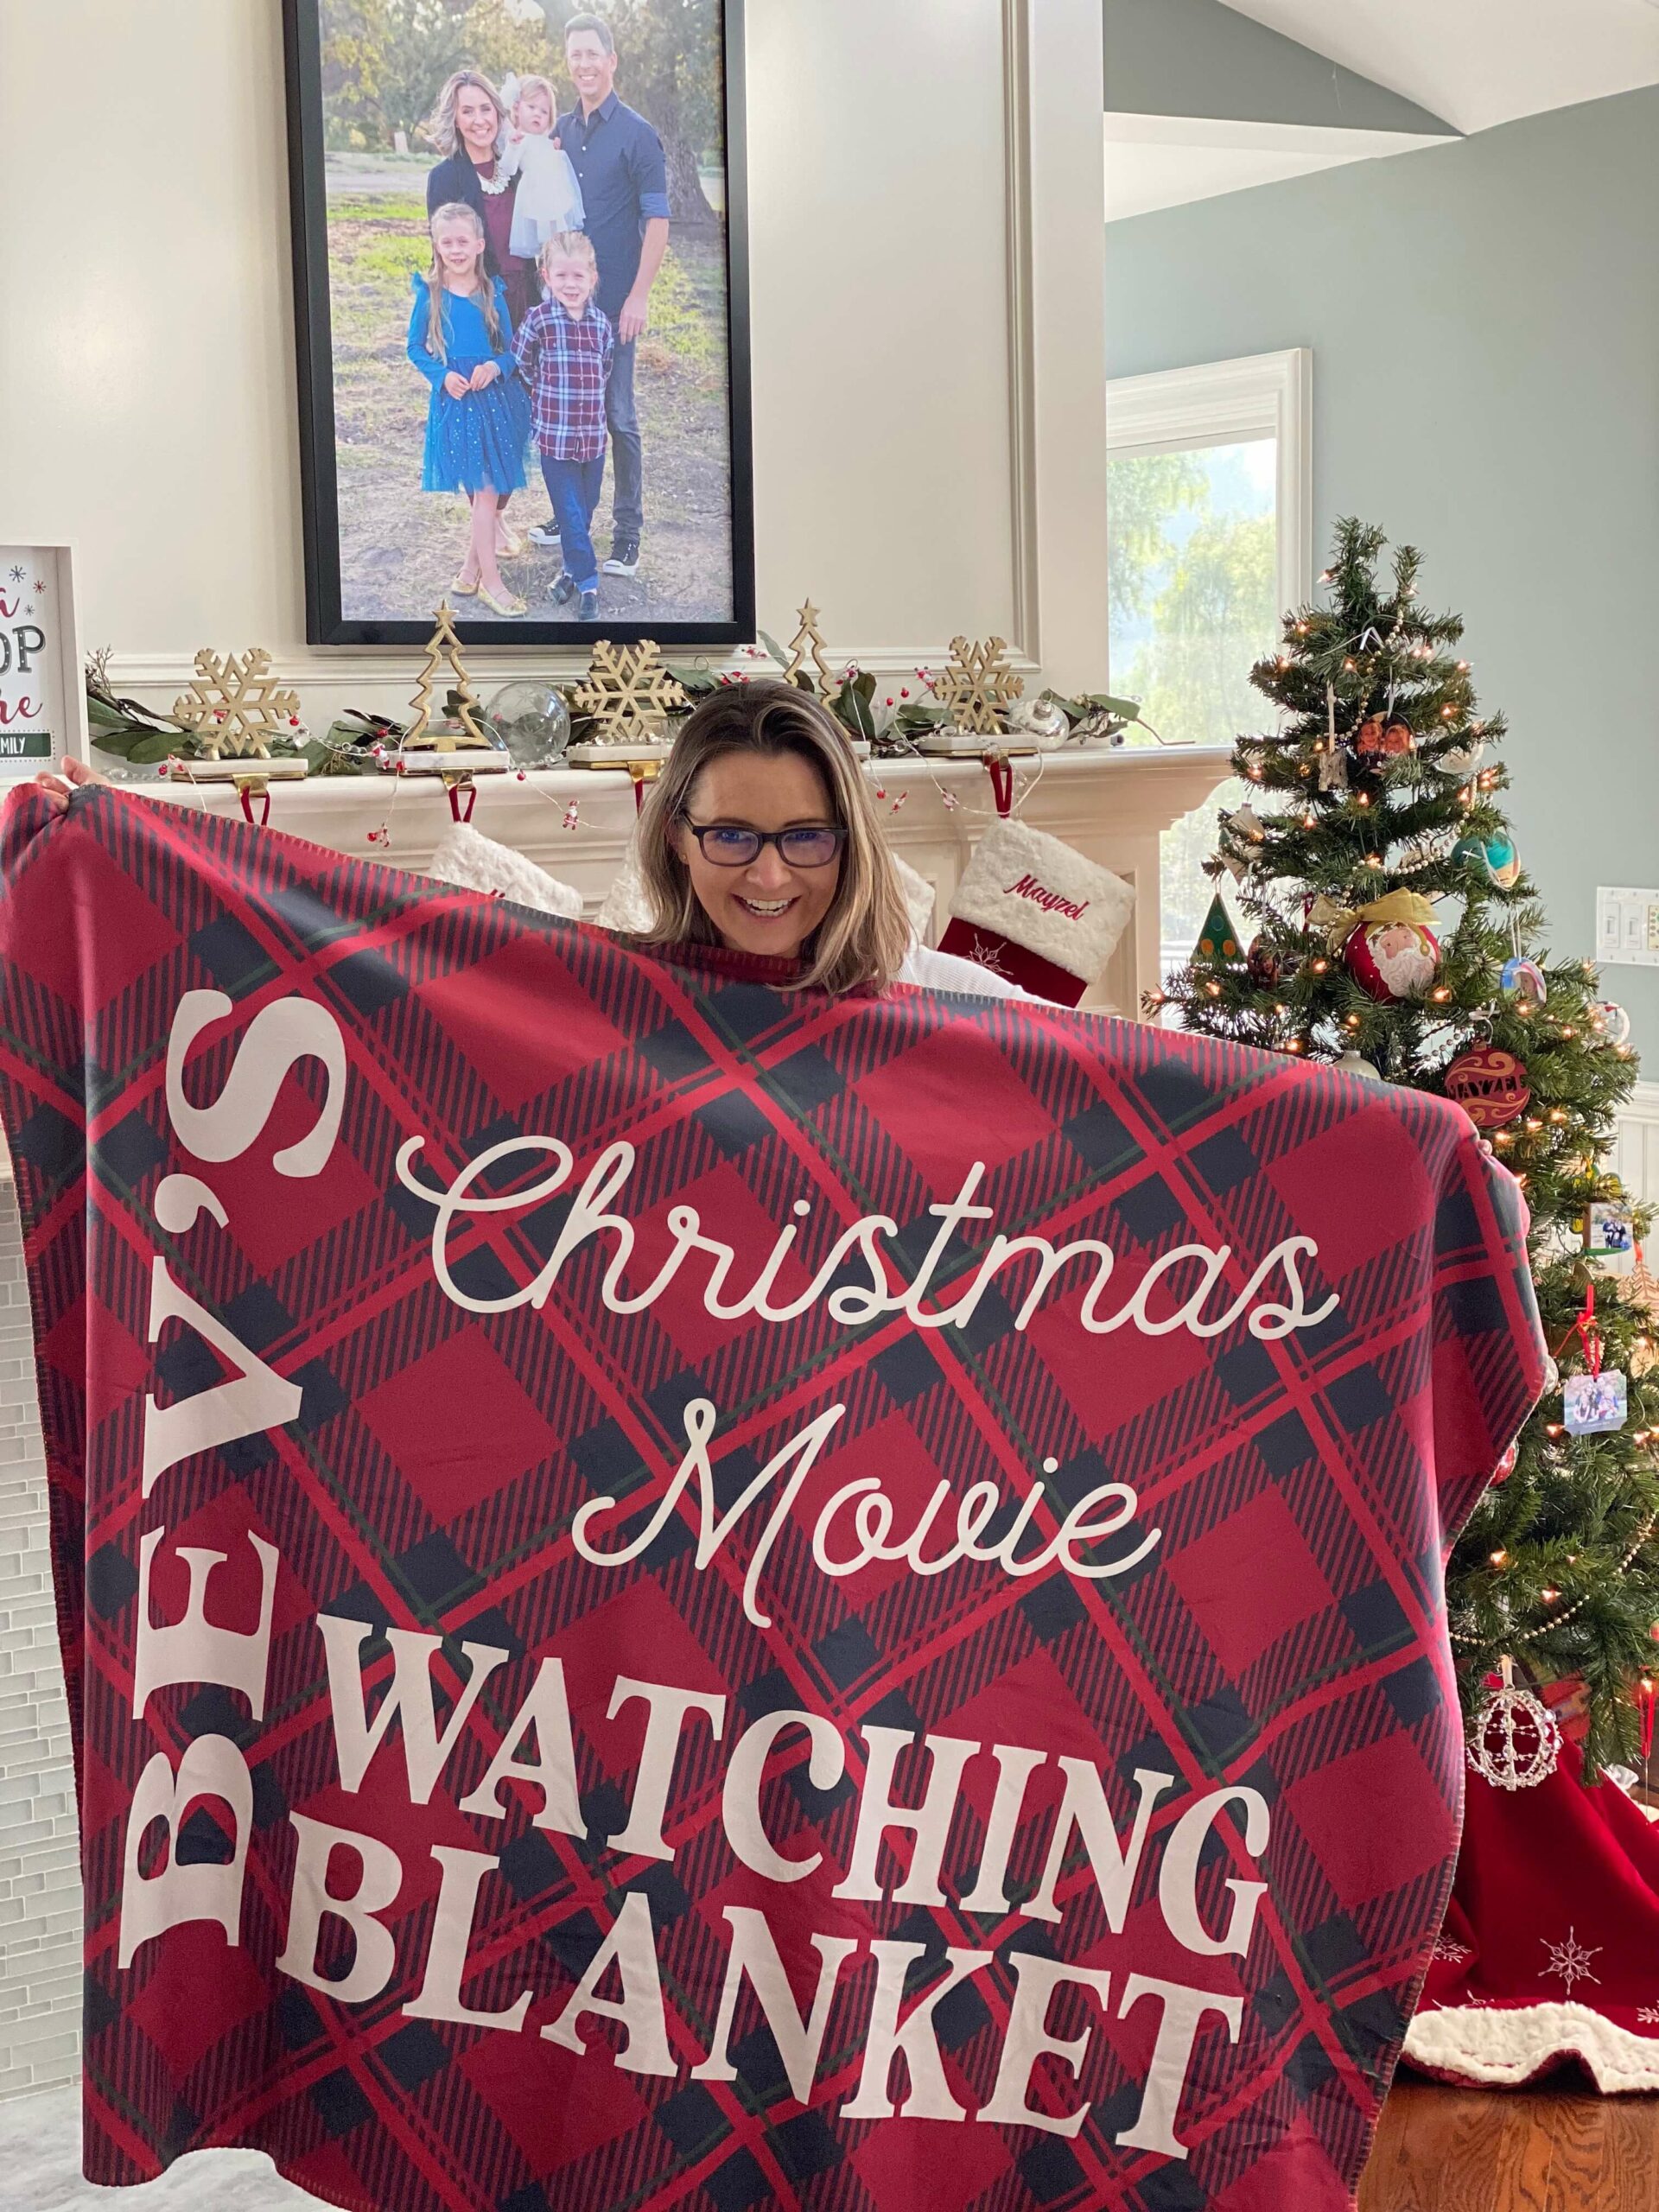 Beverley Mitchell's Christmas Movie Watching's Blanket